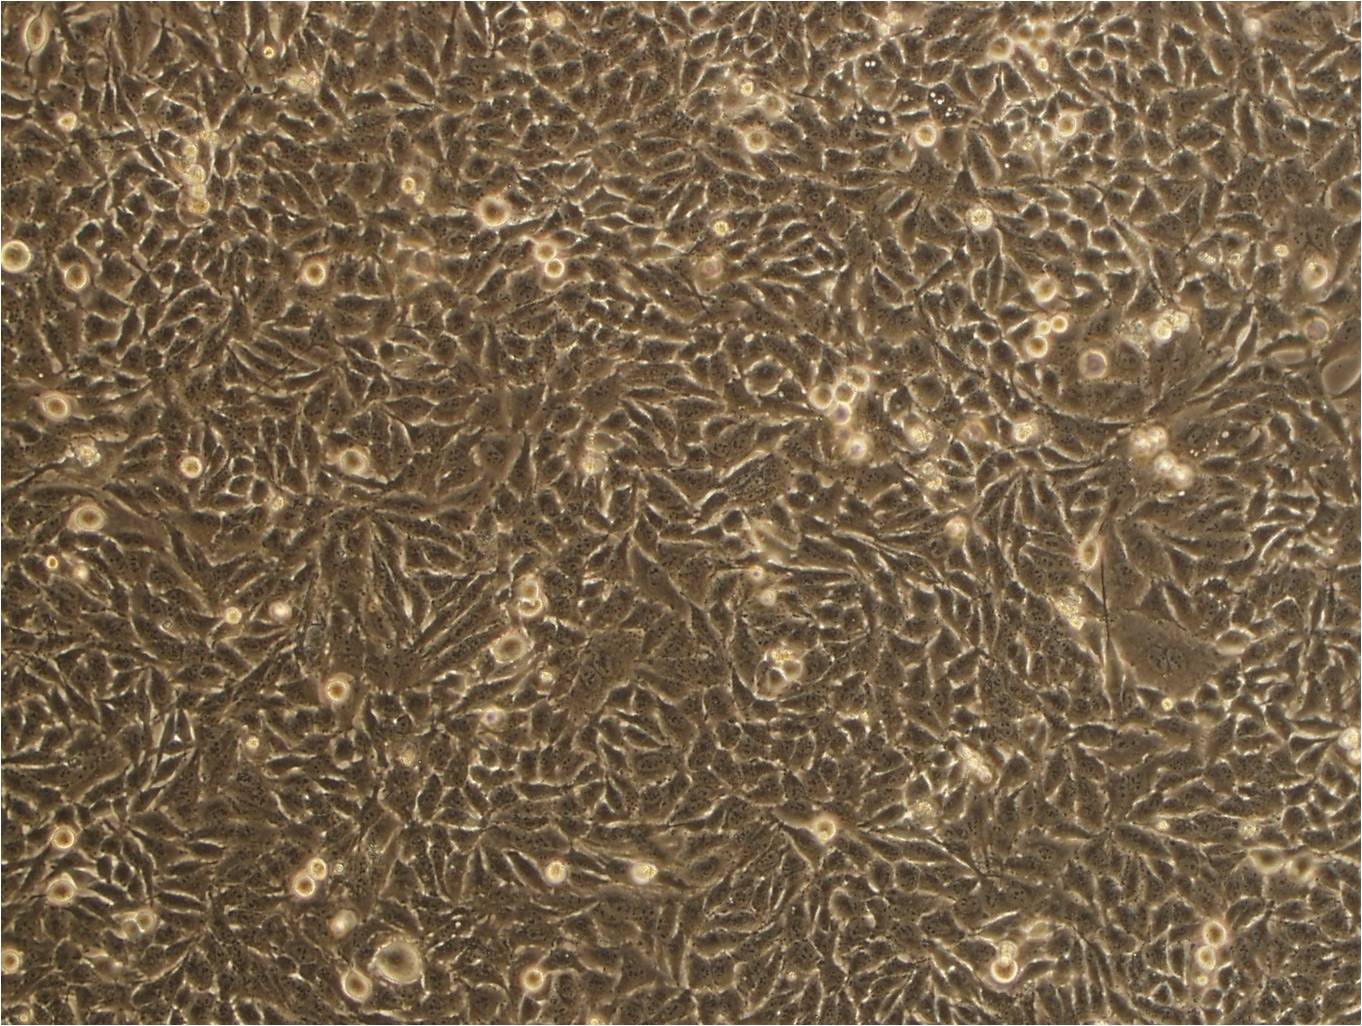 ReNcell CX Cells(赠送Str鉴定报告)|人神经干细胞